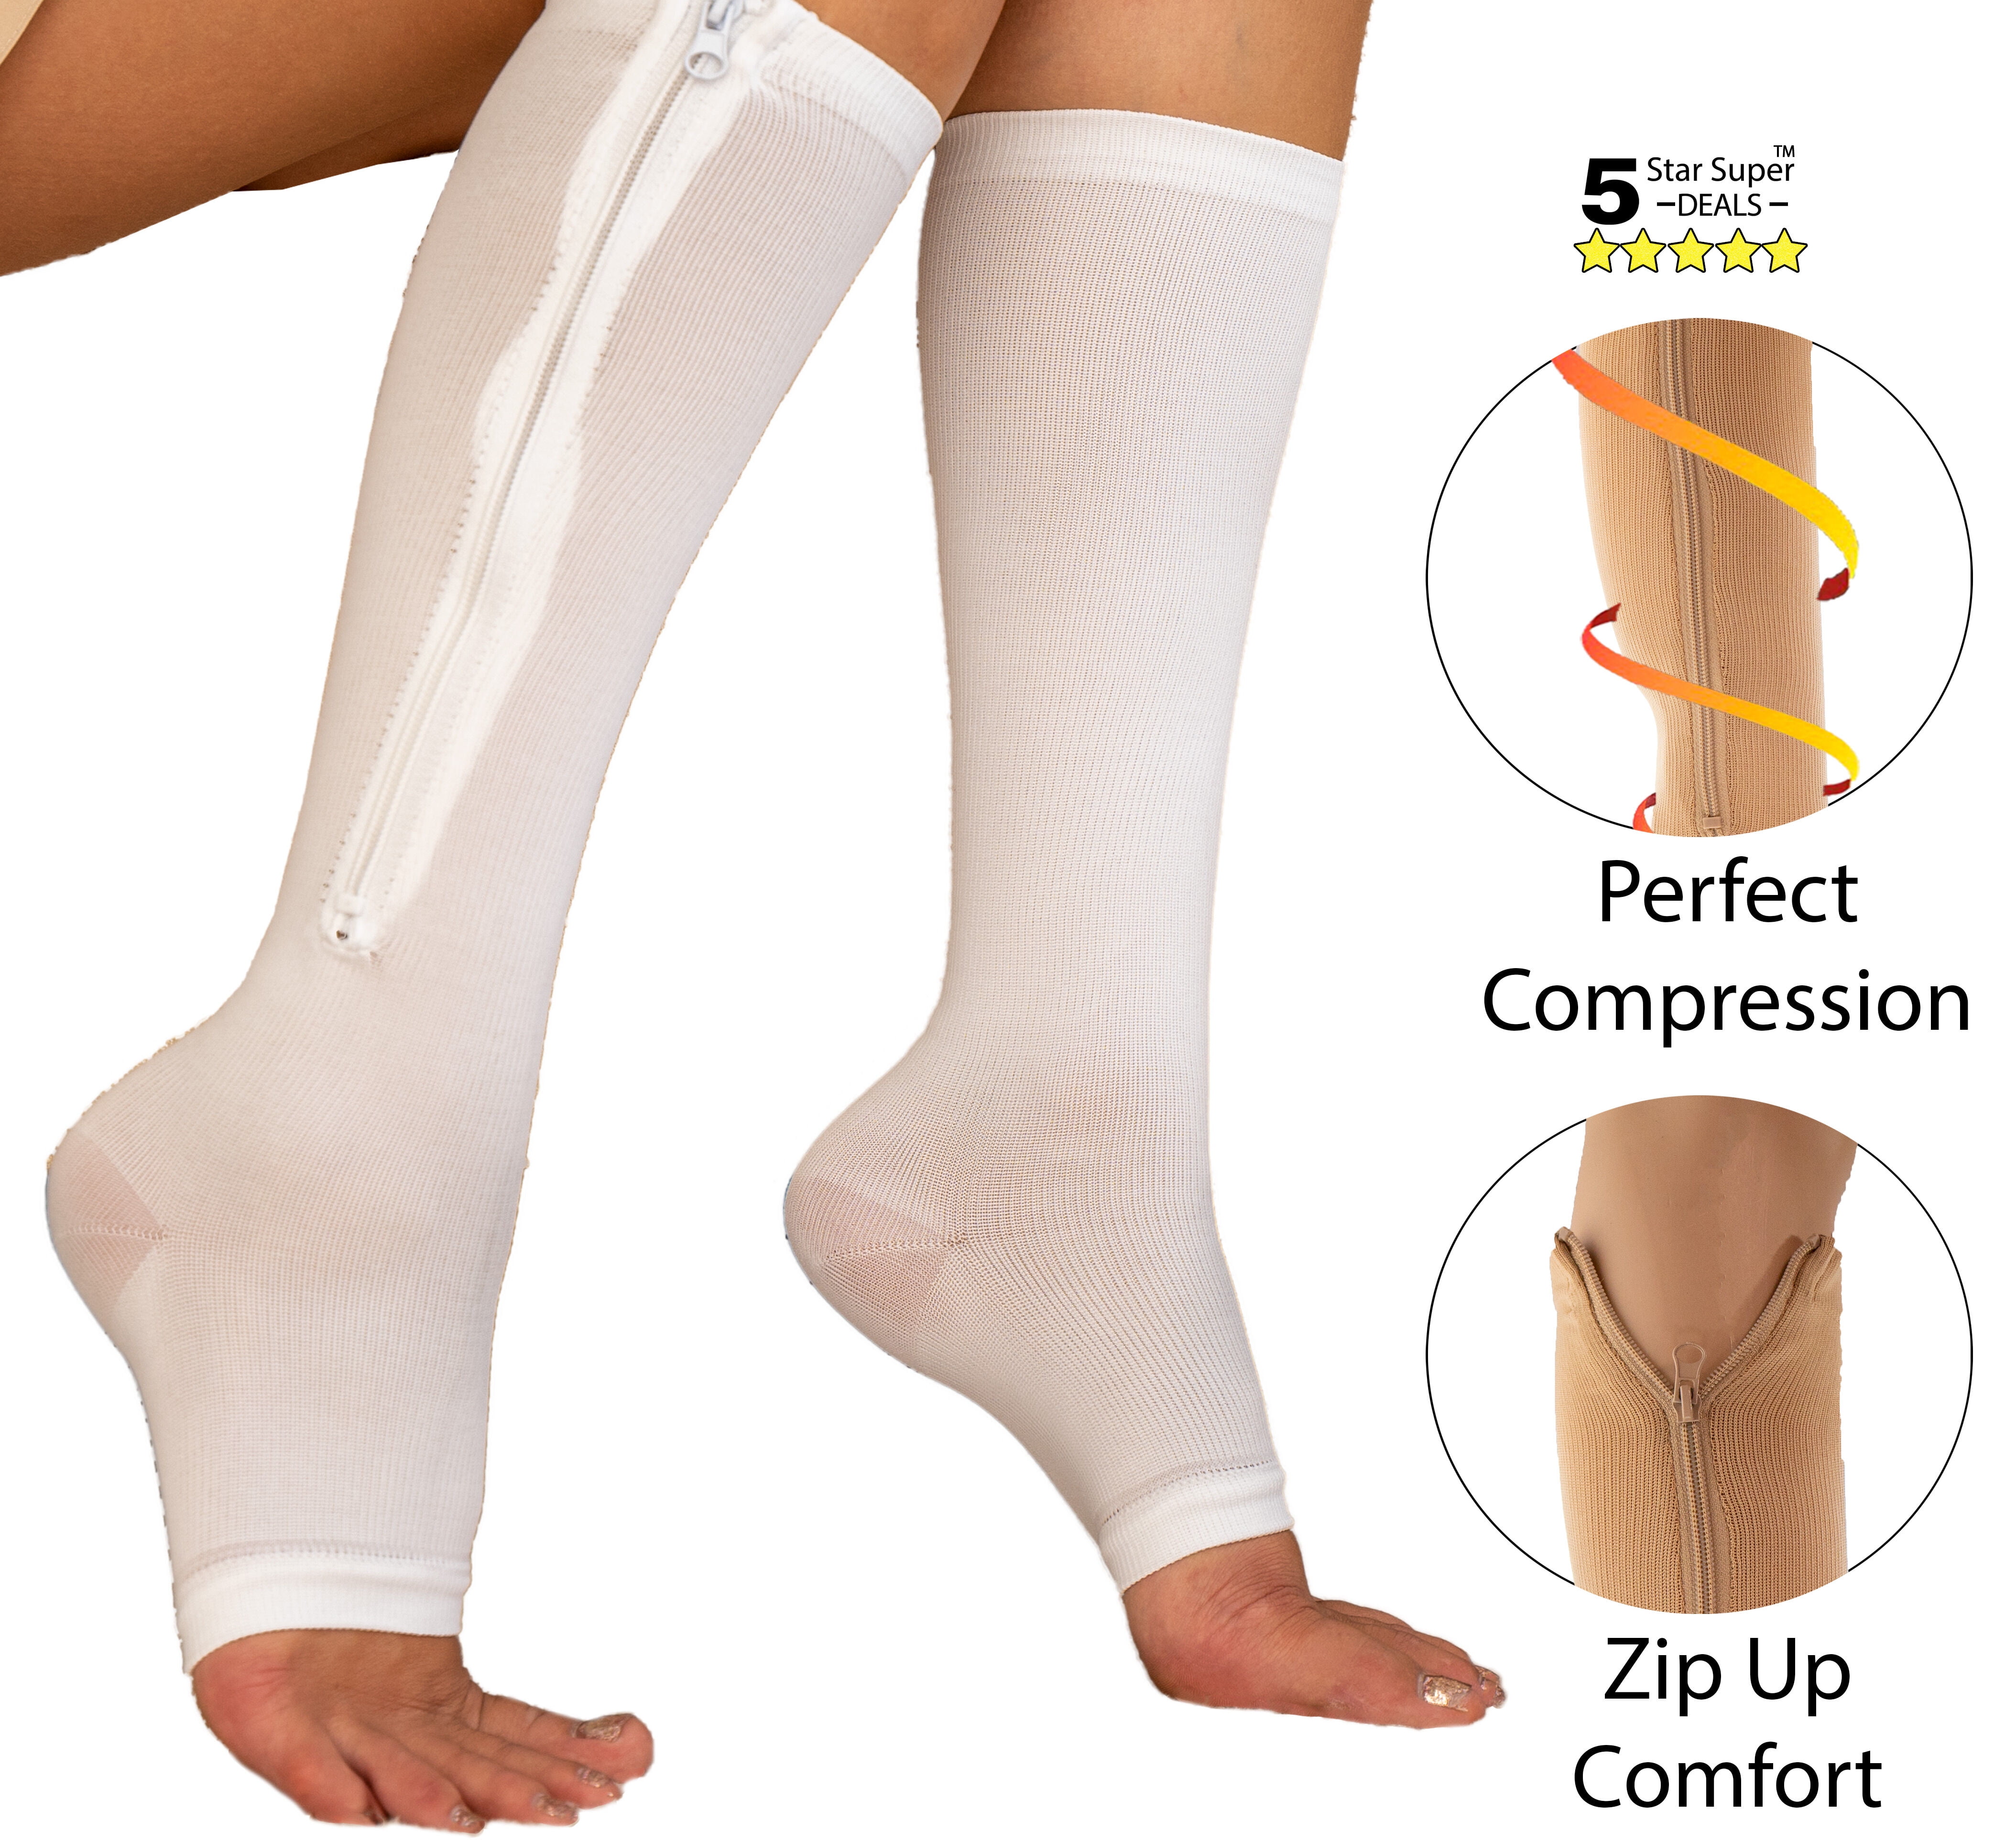 Zipper Compression Socks - Open Toe Knee High Graduated Pressure Support  Hose for Improved Leg Circulation - Unisex - Nude Large Size - 5 Star Super  Deals 